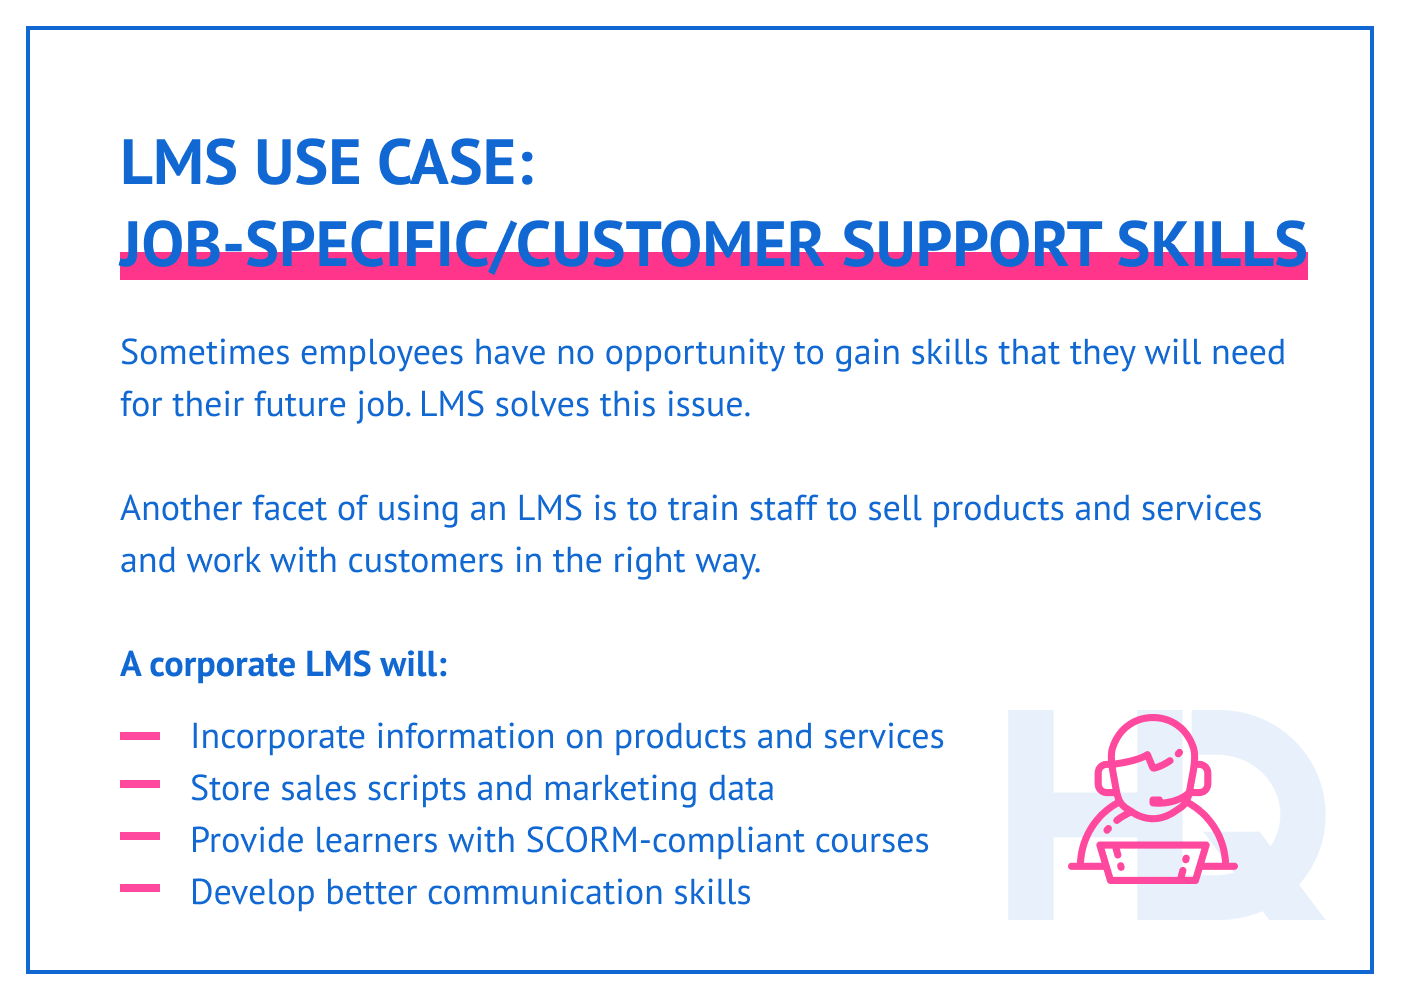 LMS use case: job-specific skills training